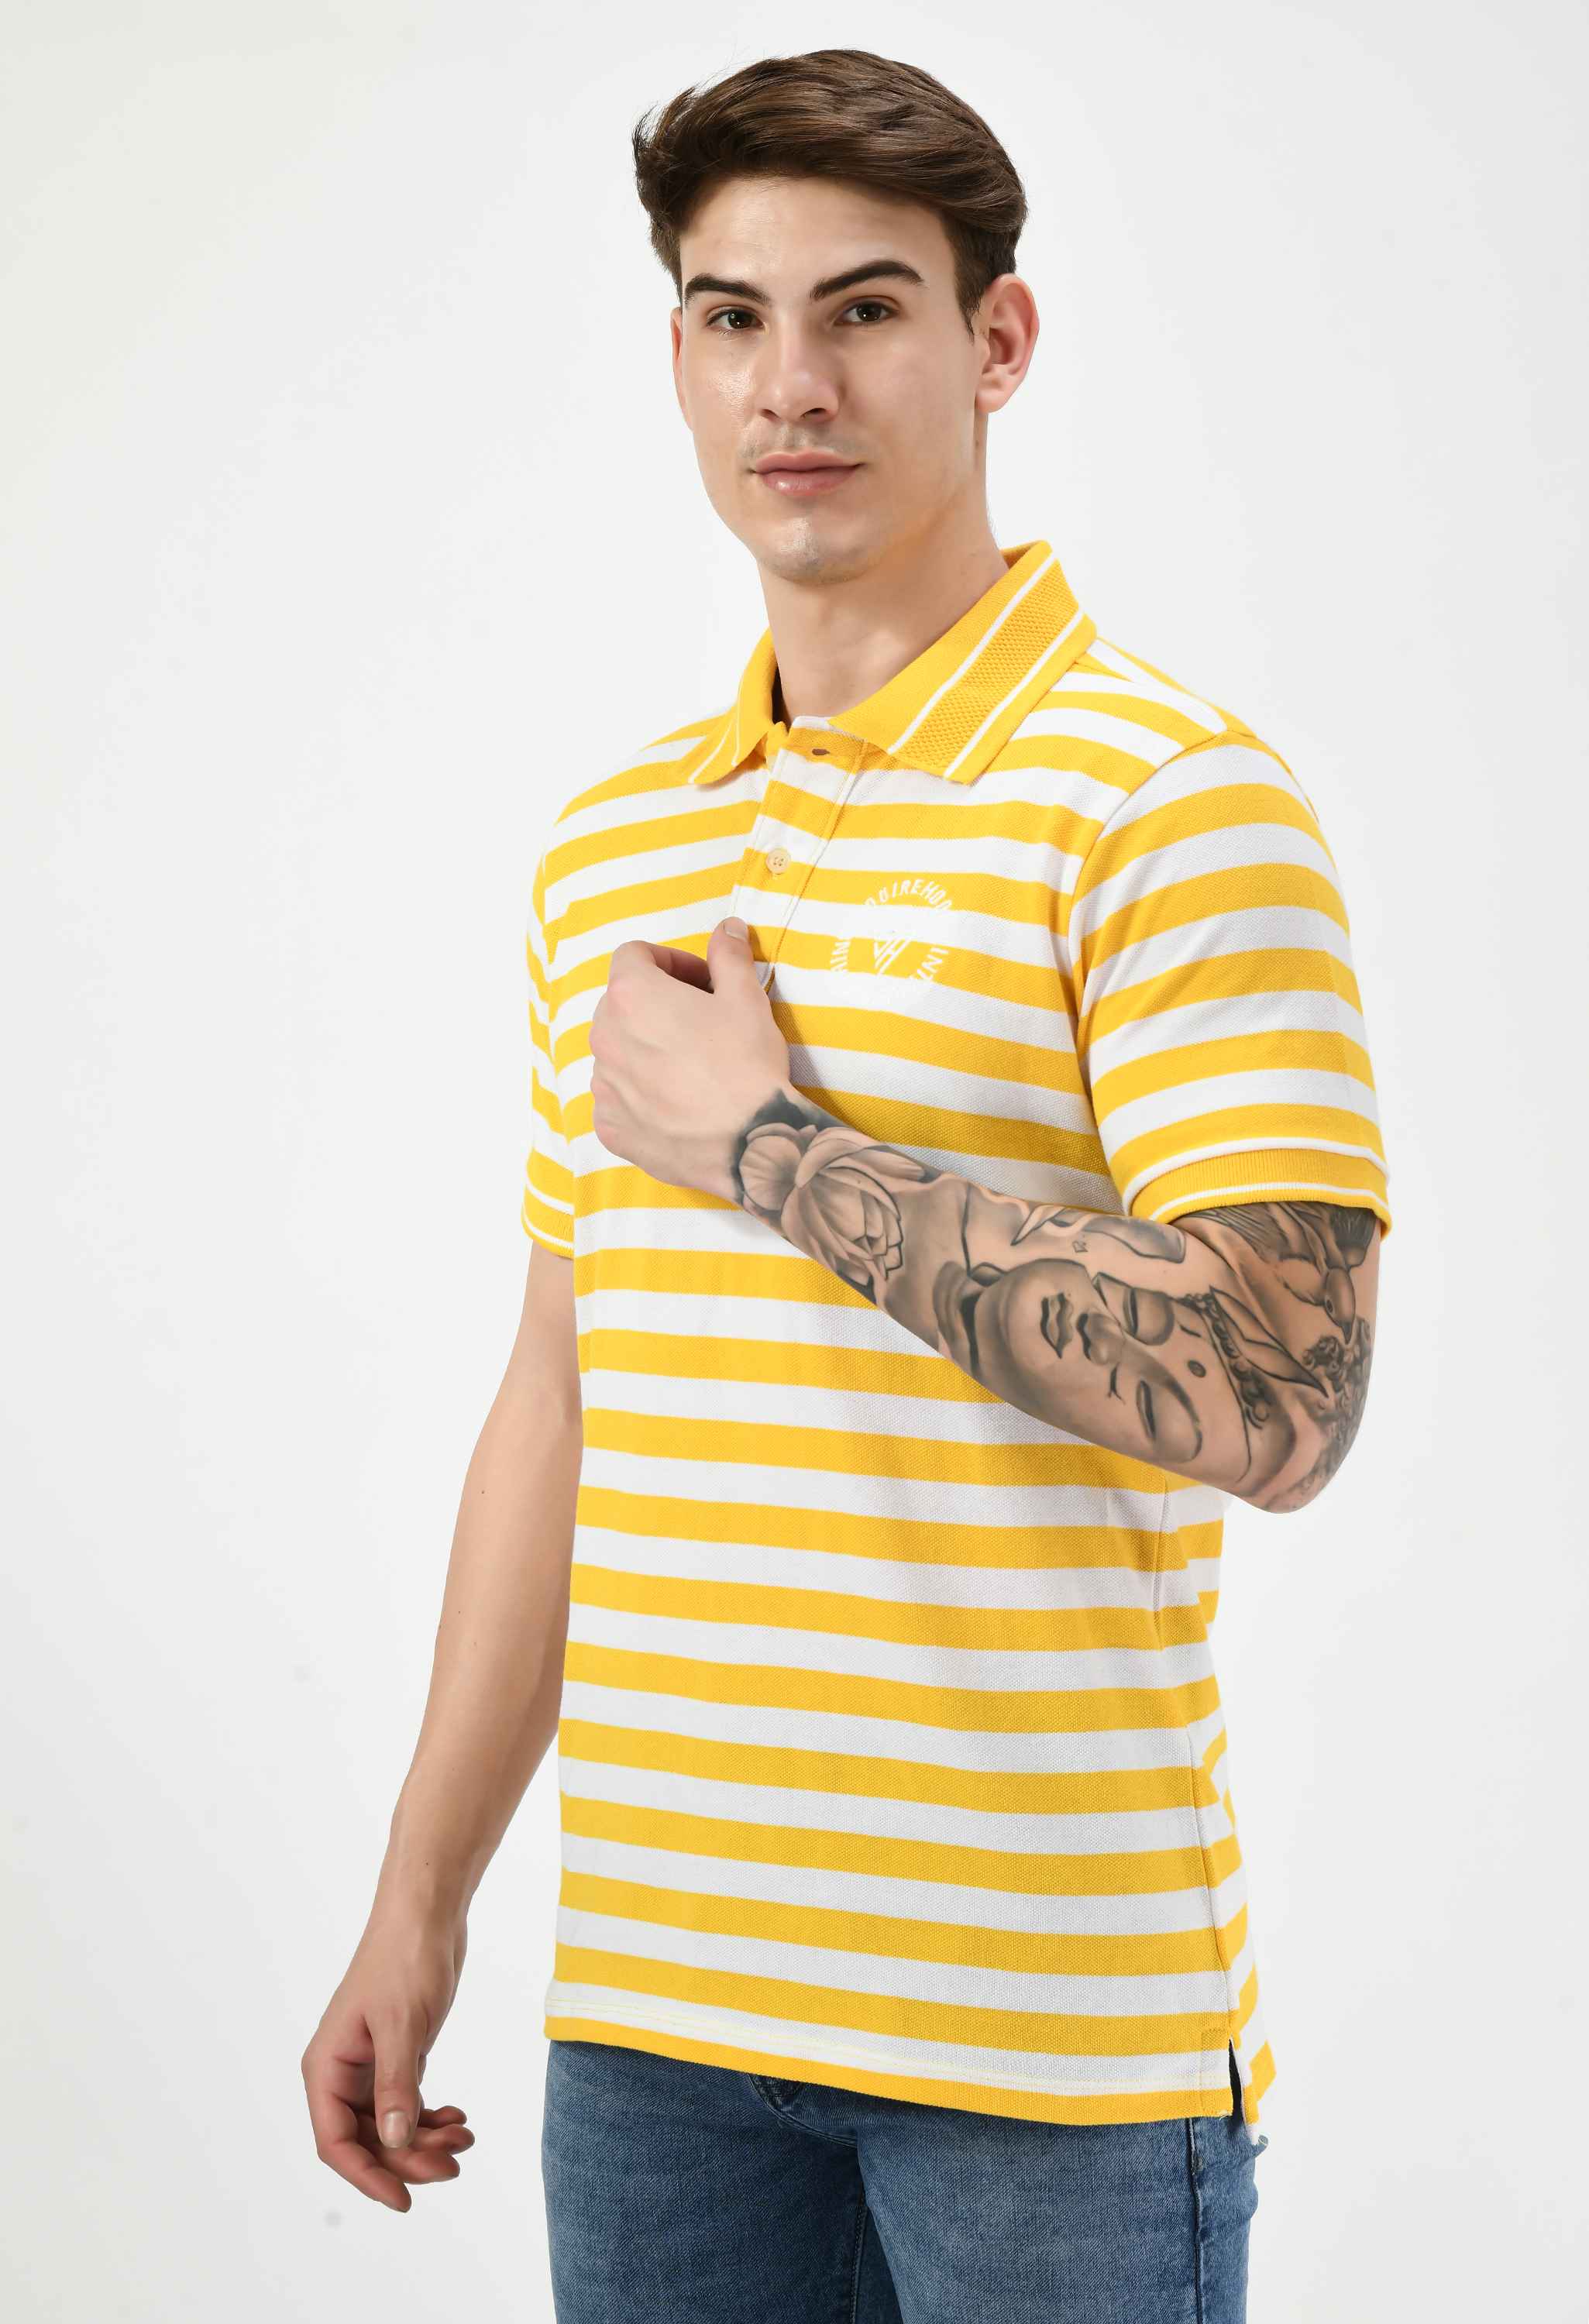 Men's Striped Yellow White Polo T-Shirt